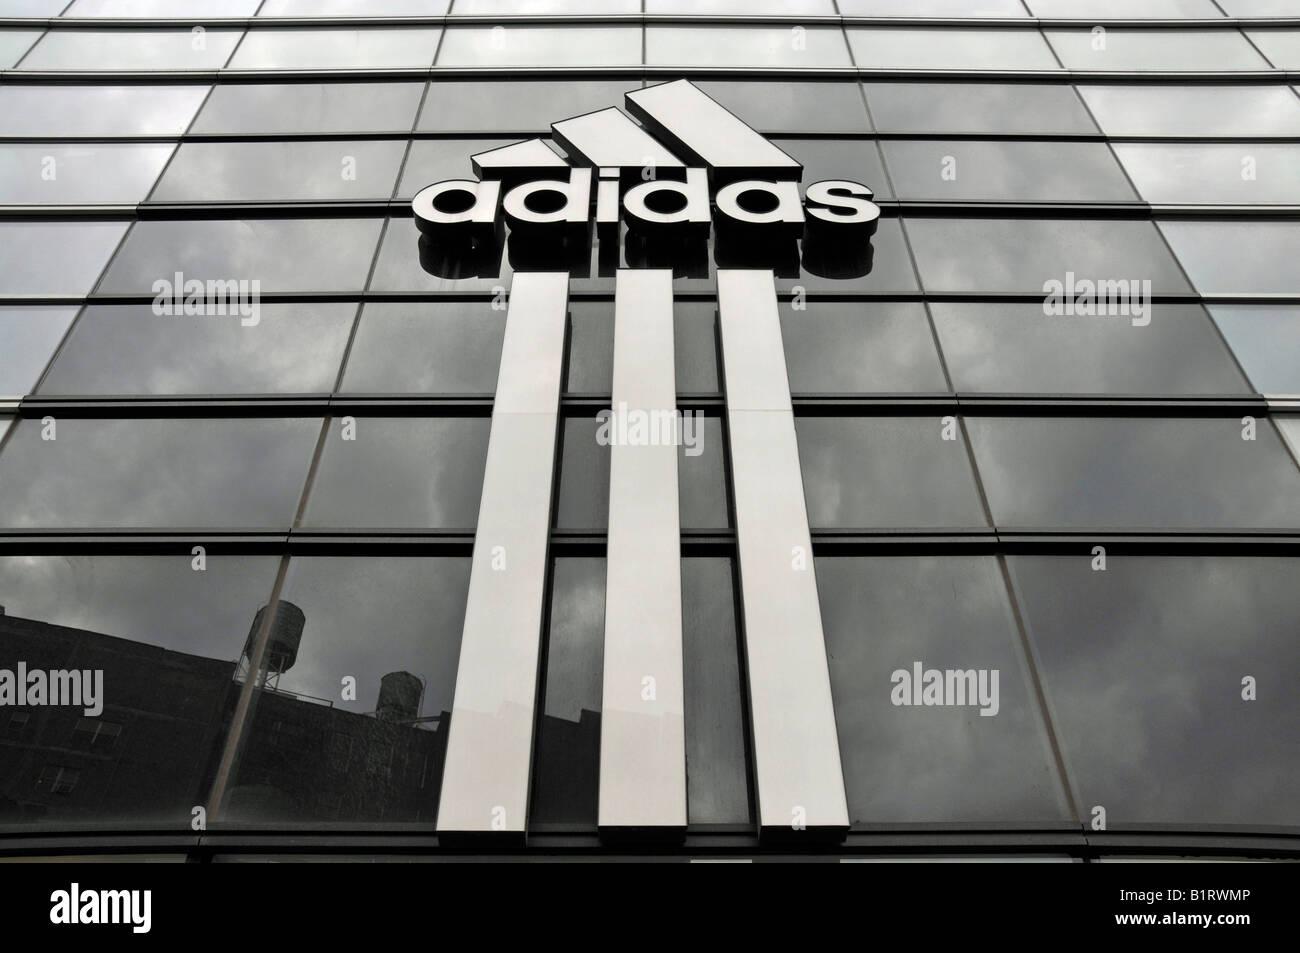 adidas company store